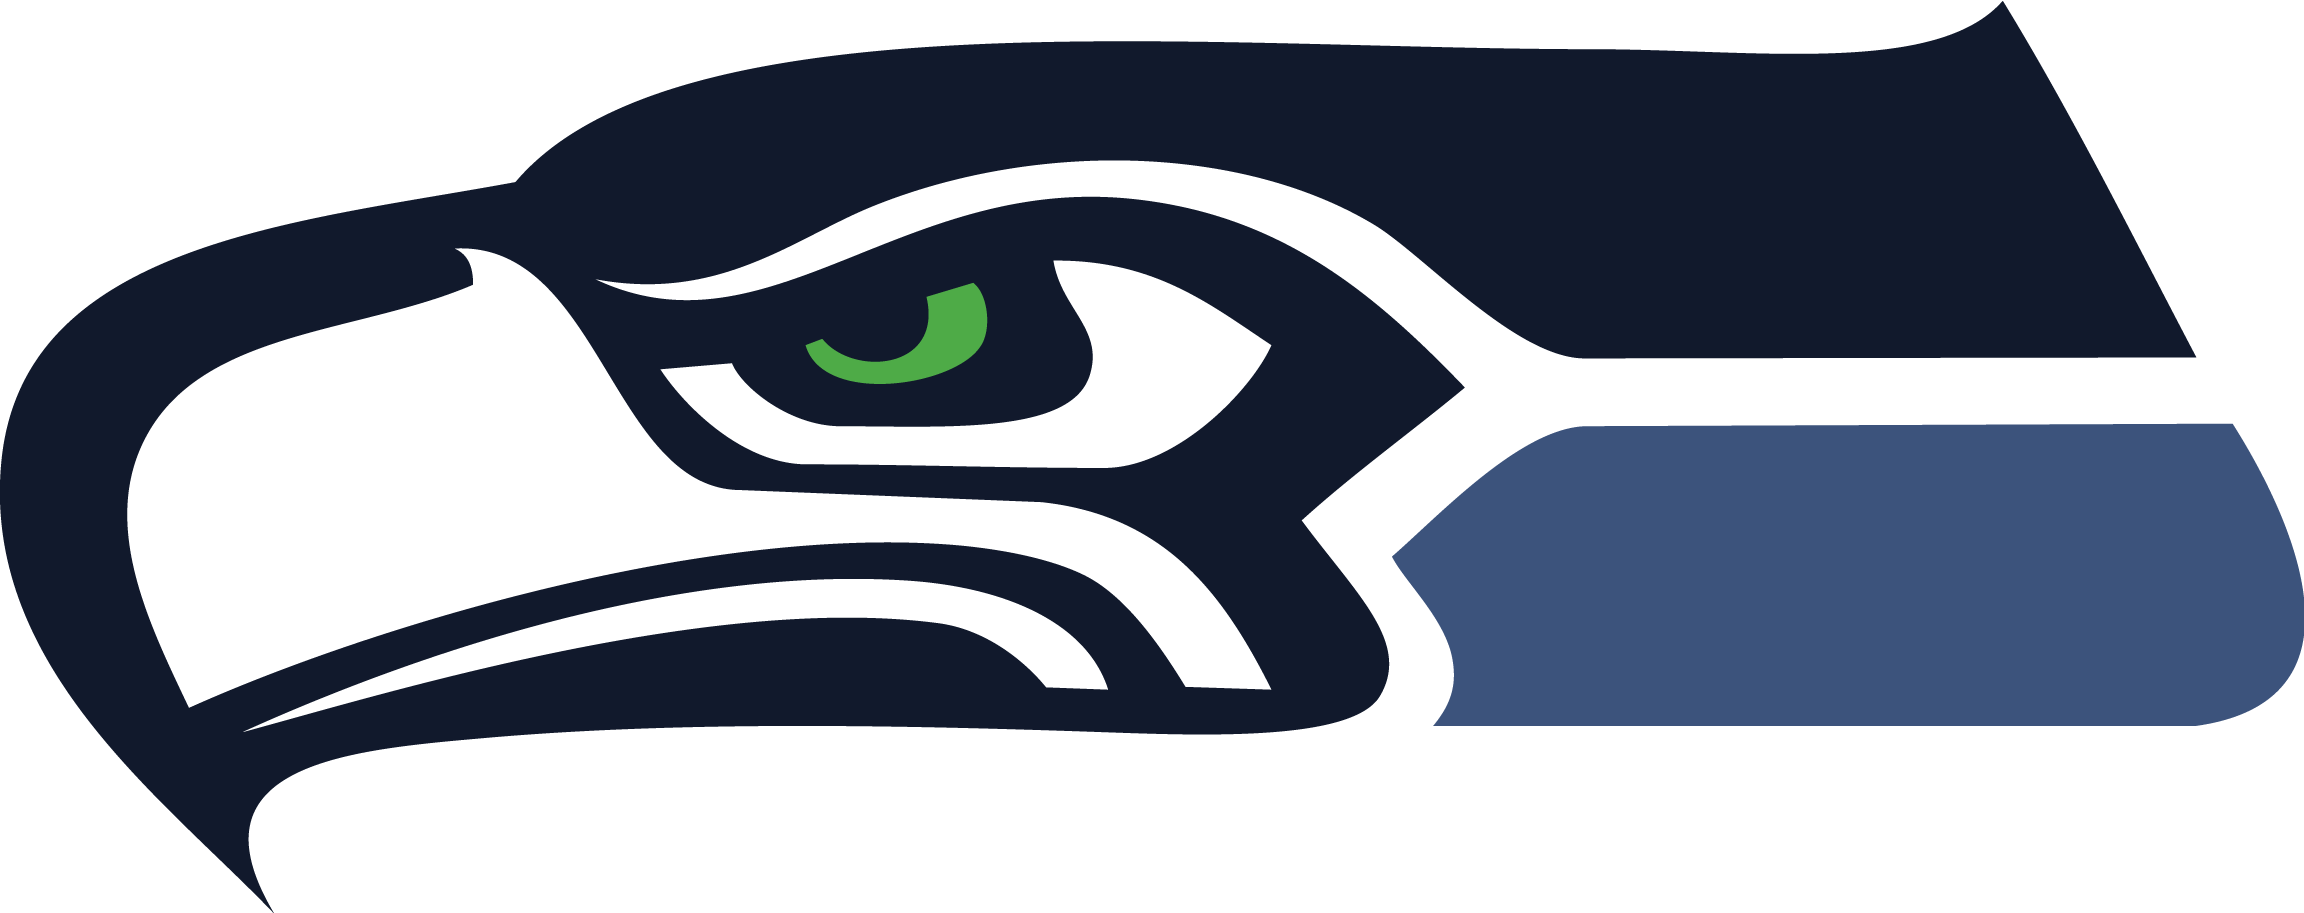 Football Seahawks Logo images